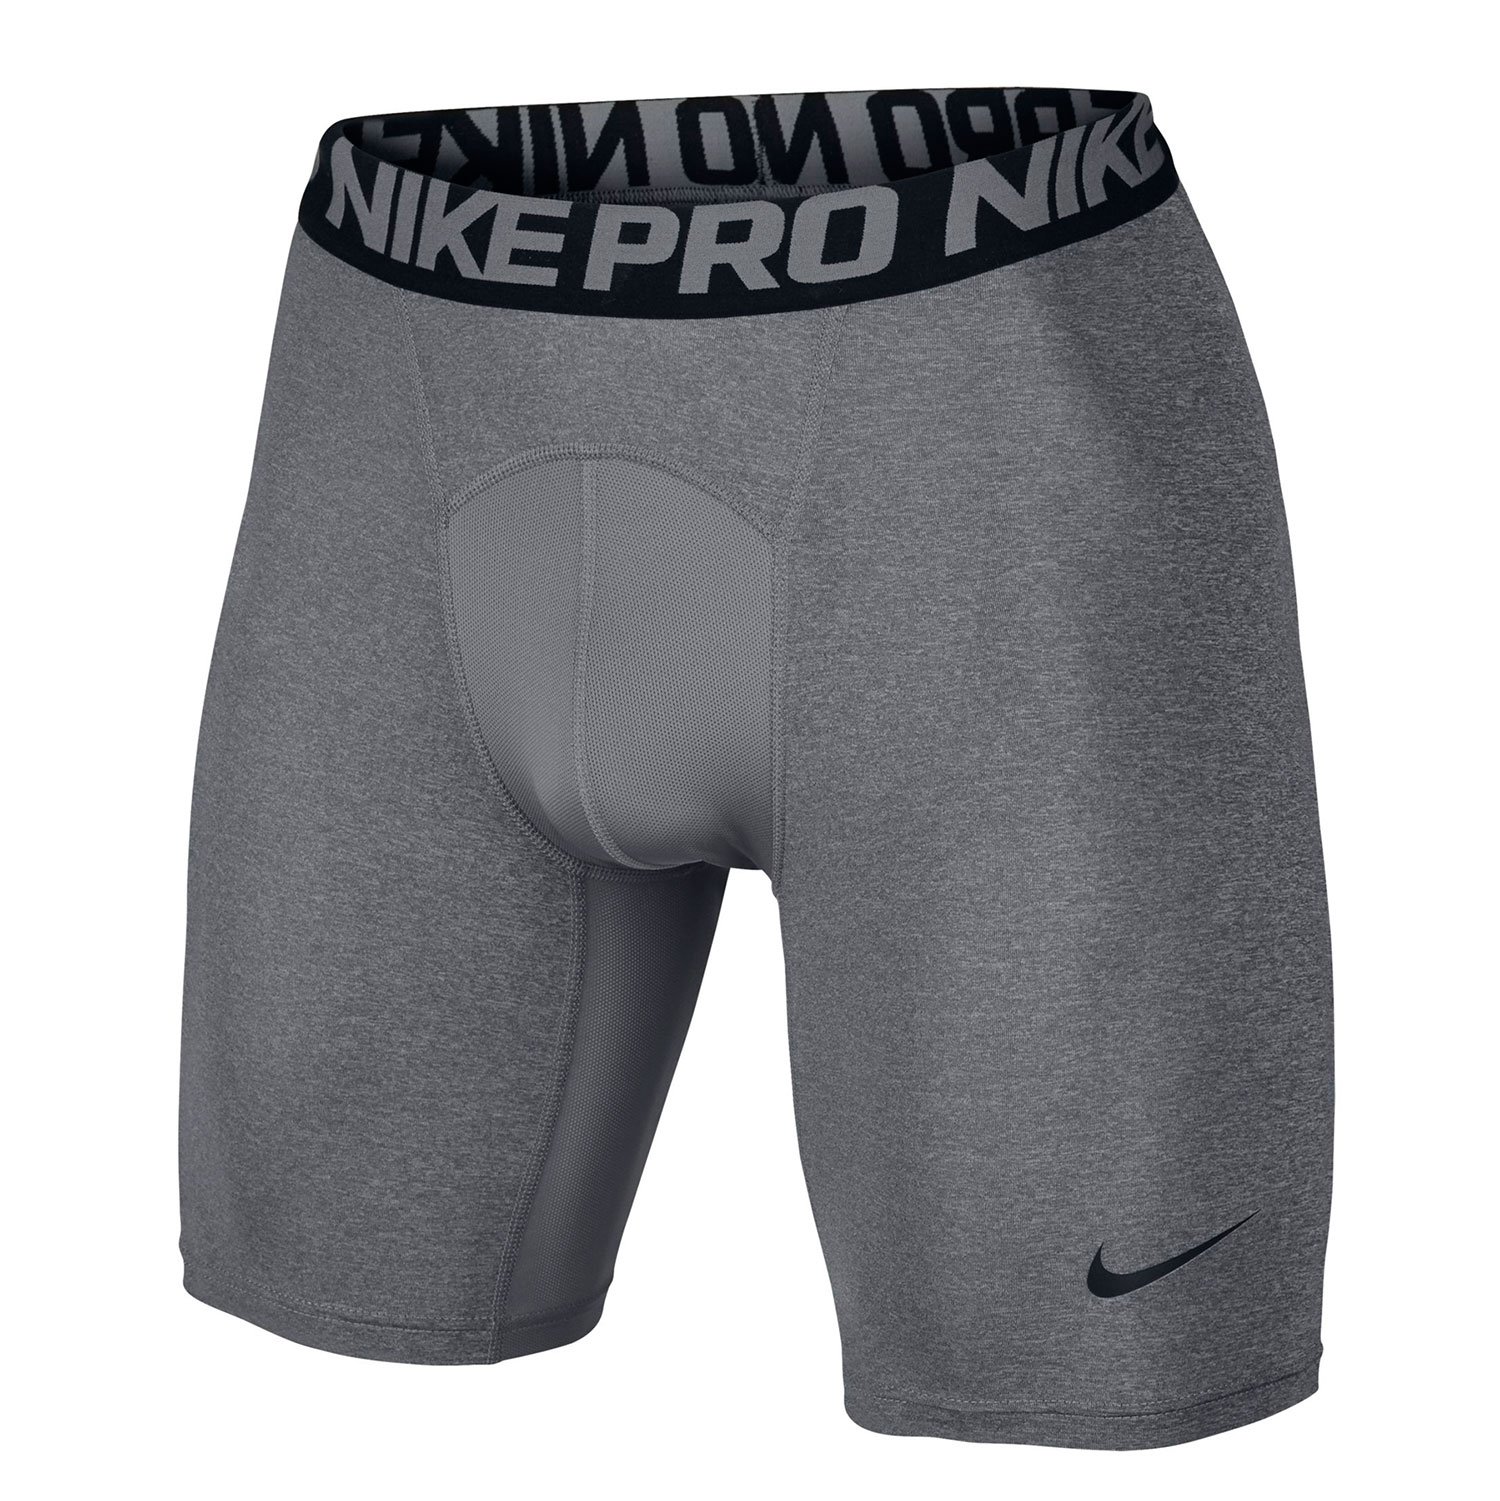 Download Nike Men's Hypercool Compression 6" Shorts